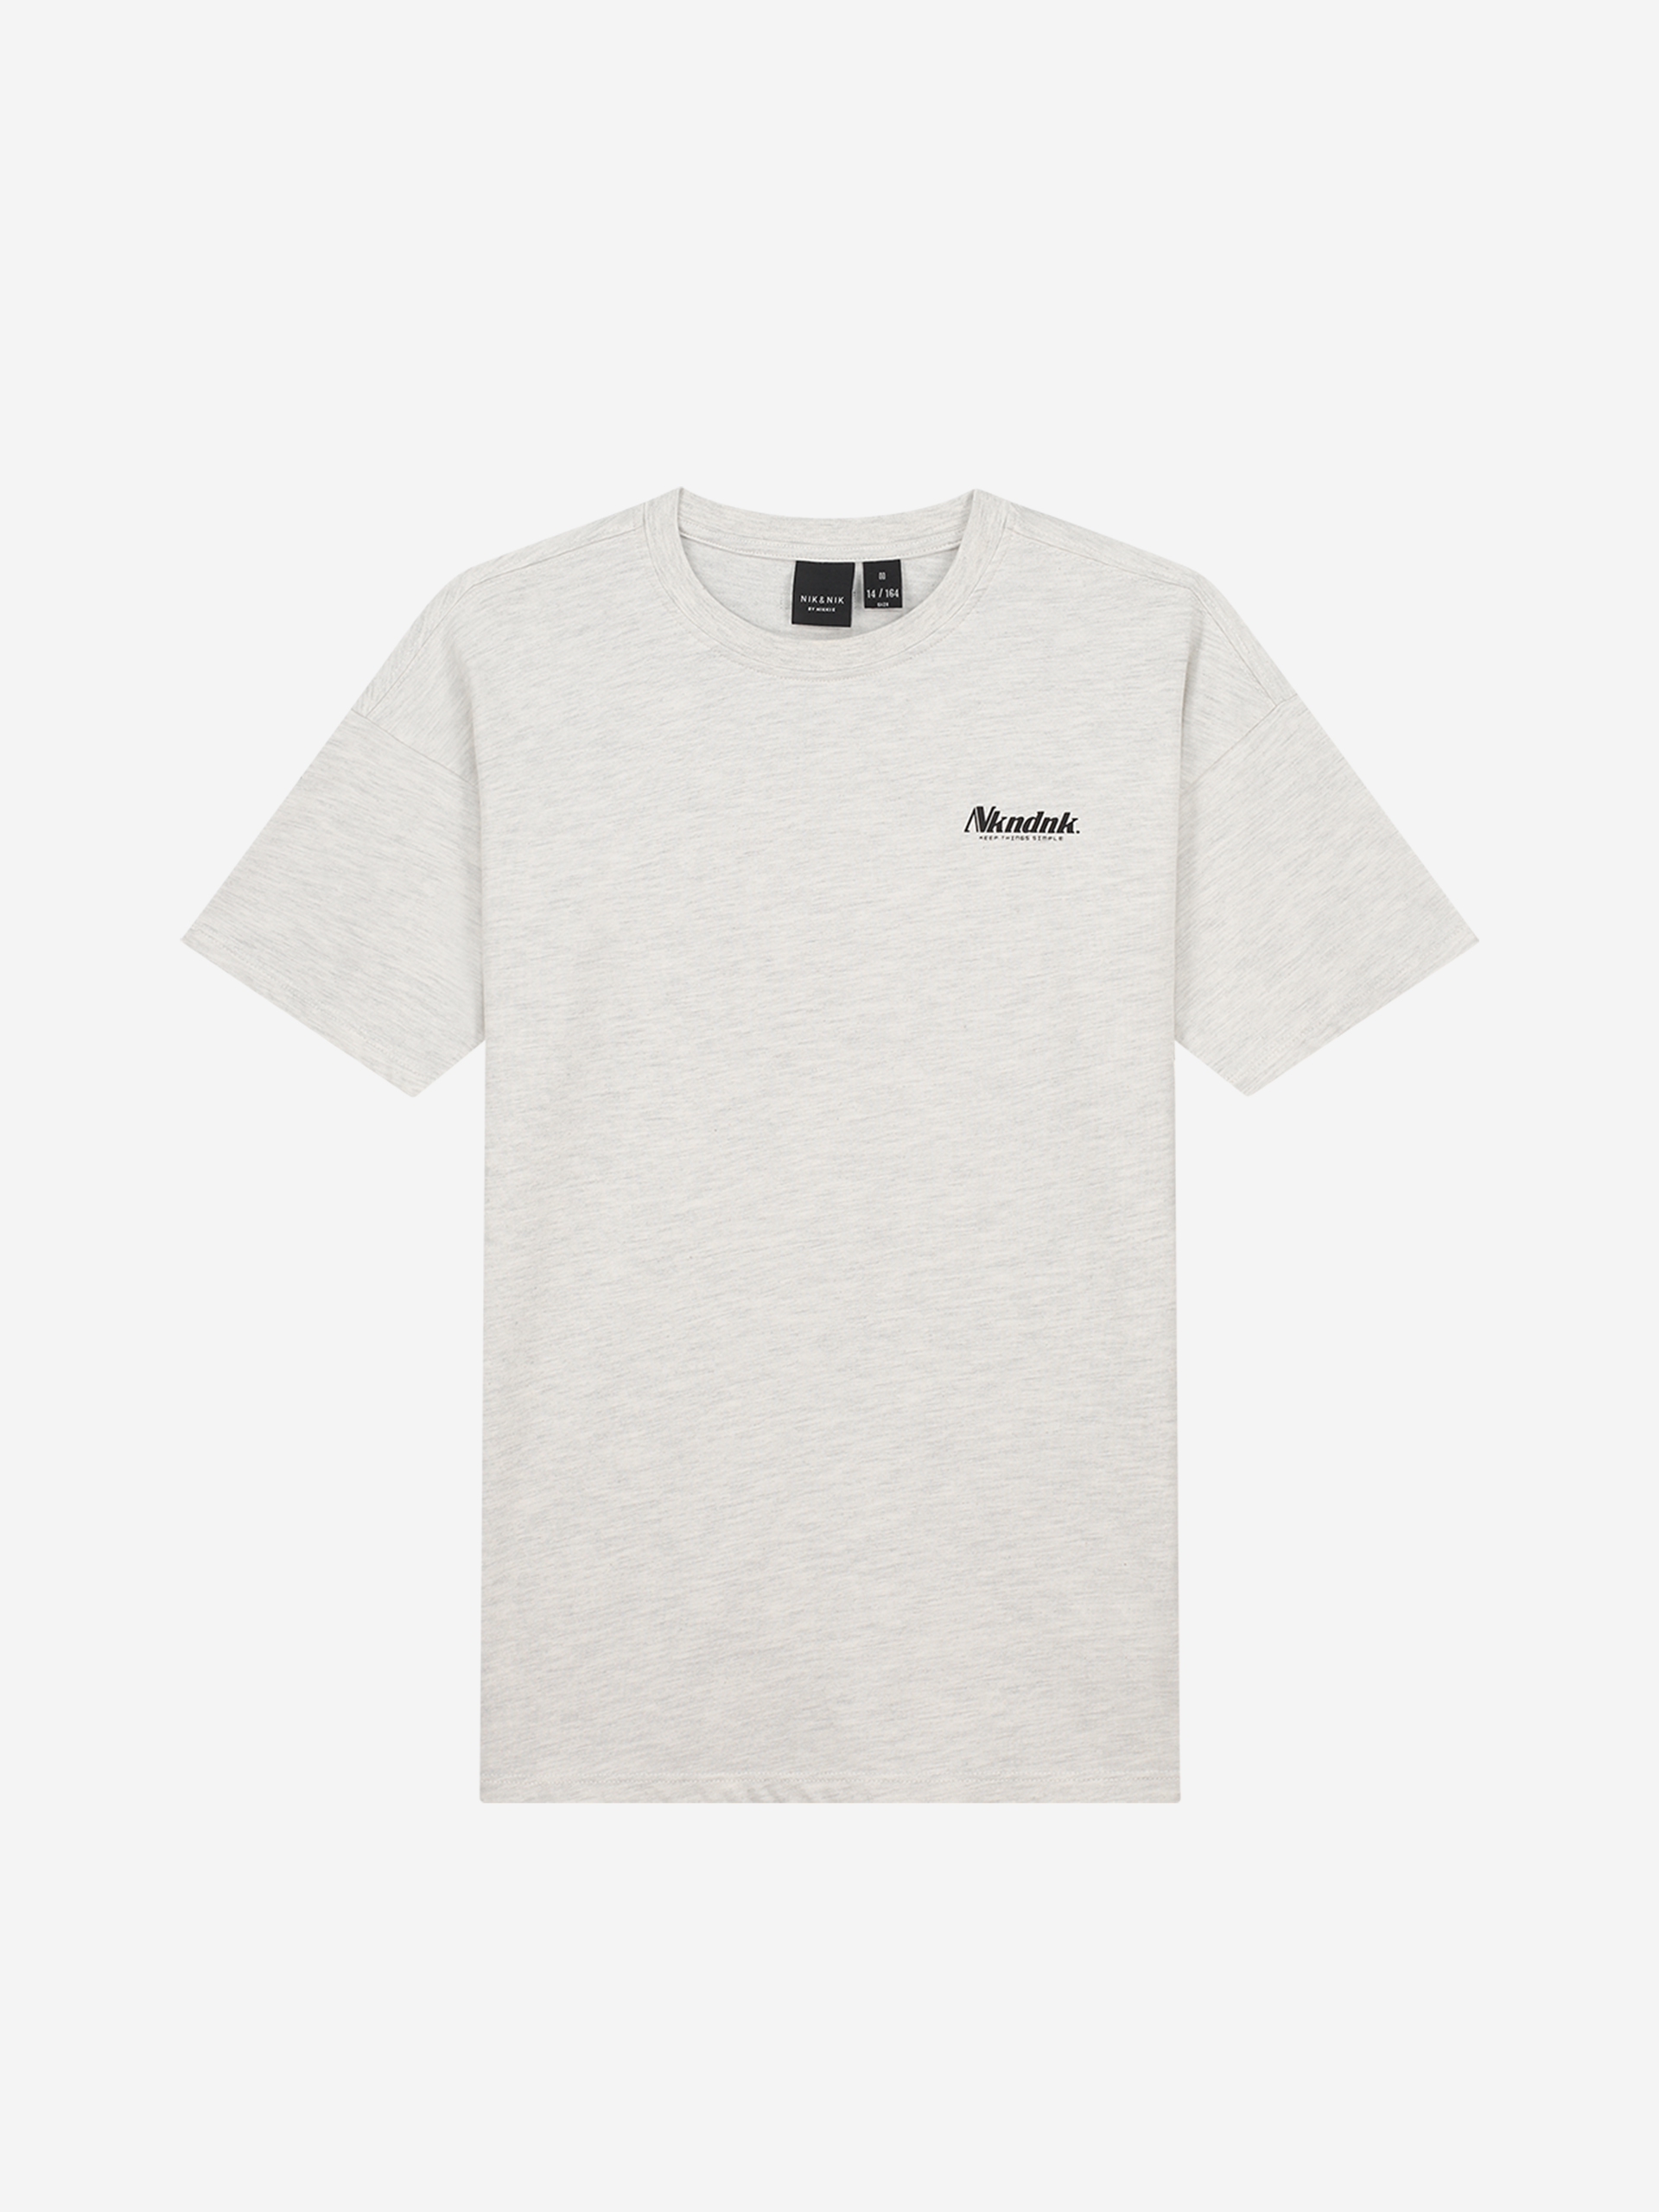 Keep Simple T-Shirt